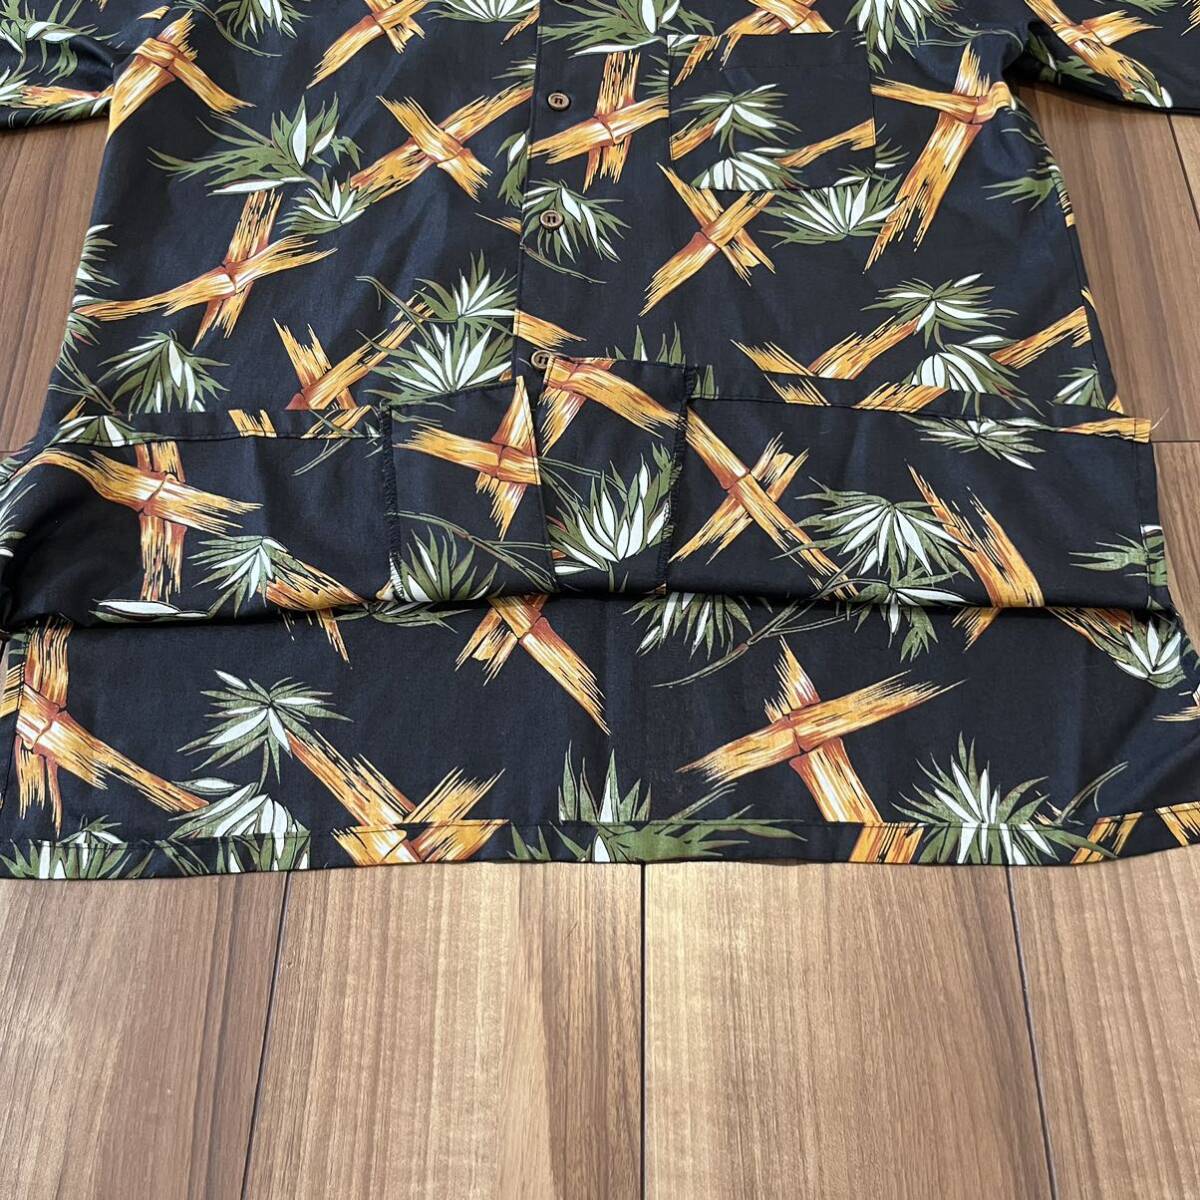 Leoz 90s アロハシャツ aloha-shirt 半袖 開襟 オープンカラー バンブー 総柄 竹 和柄 ヴィンテージ サイズM 玉mc2825_画像7